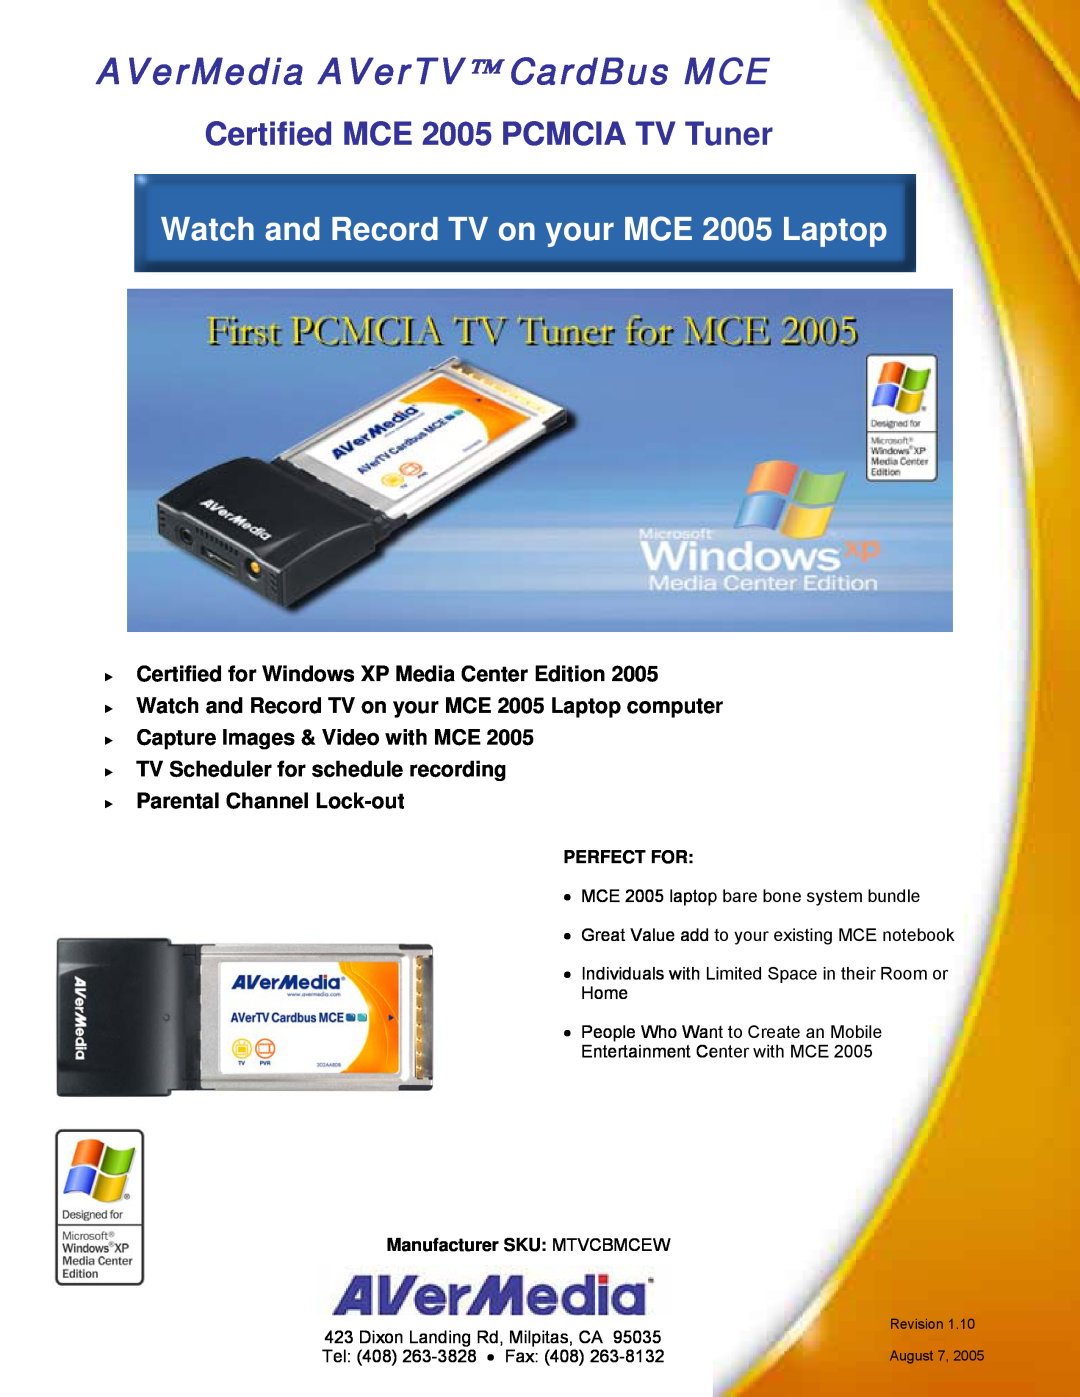 AVerMedia Technologies manual AVerMedia AVerTV CardBus MCE, Watch and Record TV on your MCE 2005 Laptop 